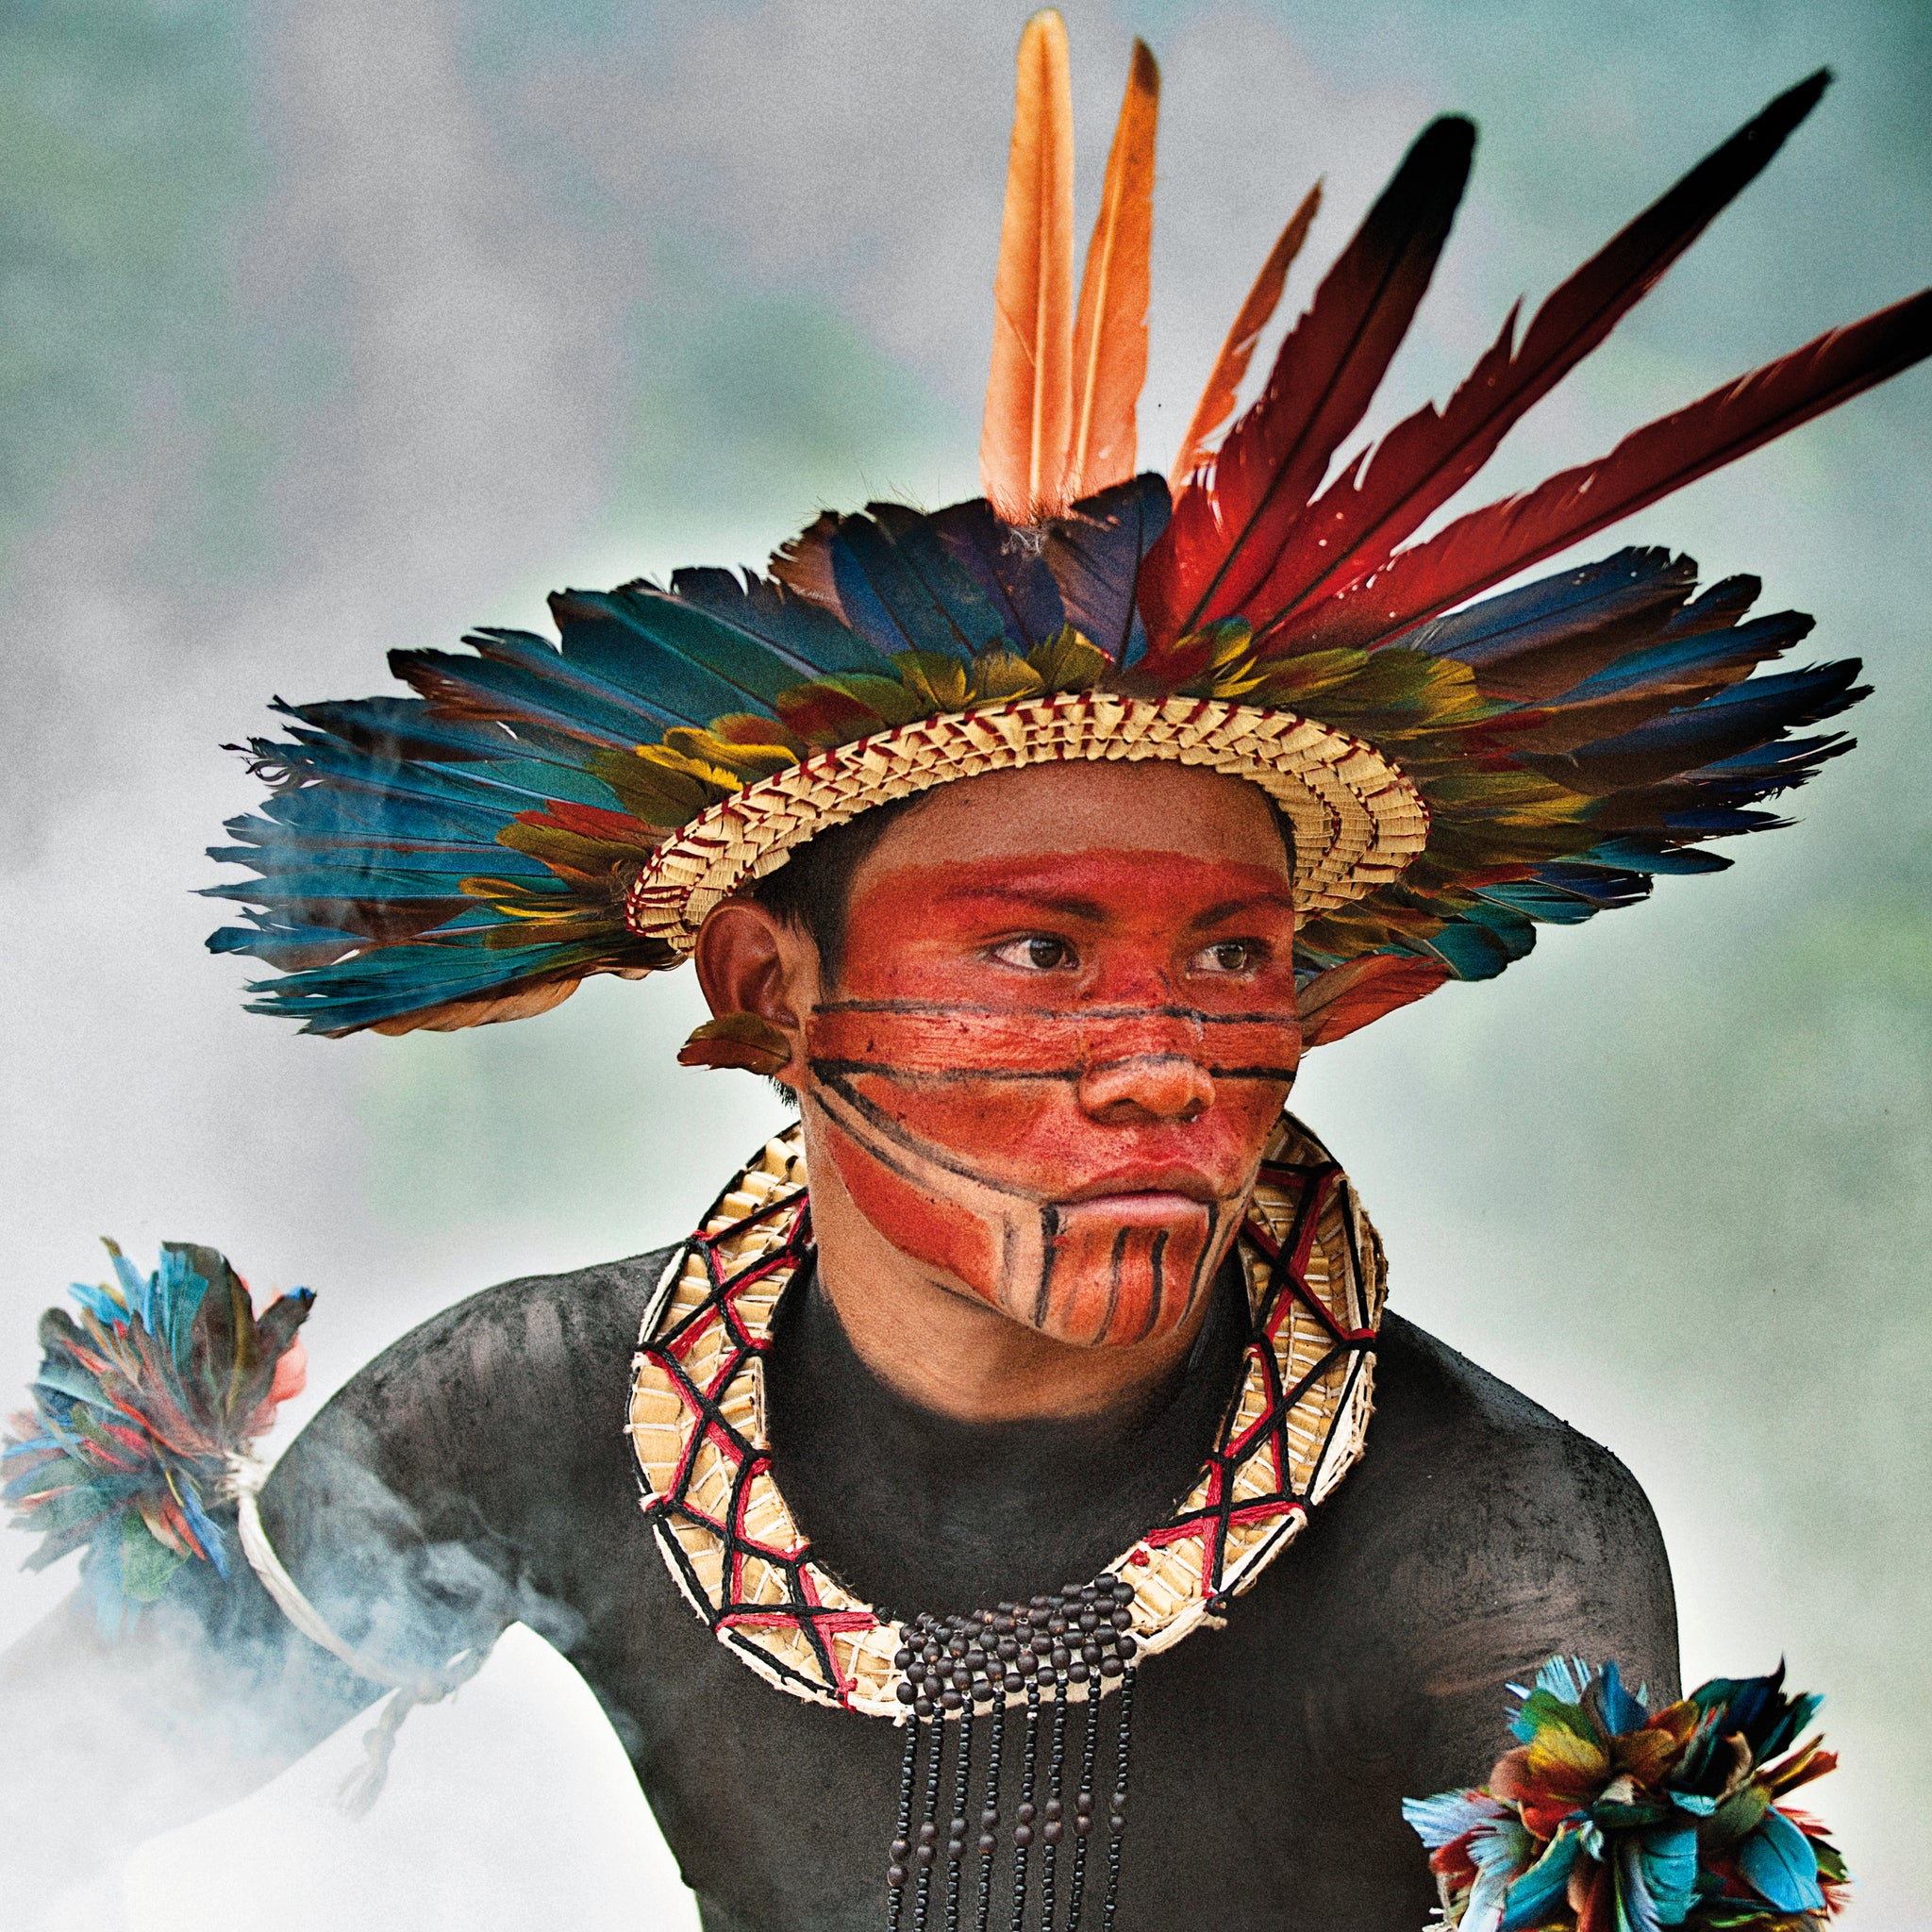 Limited edition print - Amazonian Indigenous man